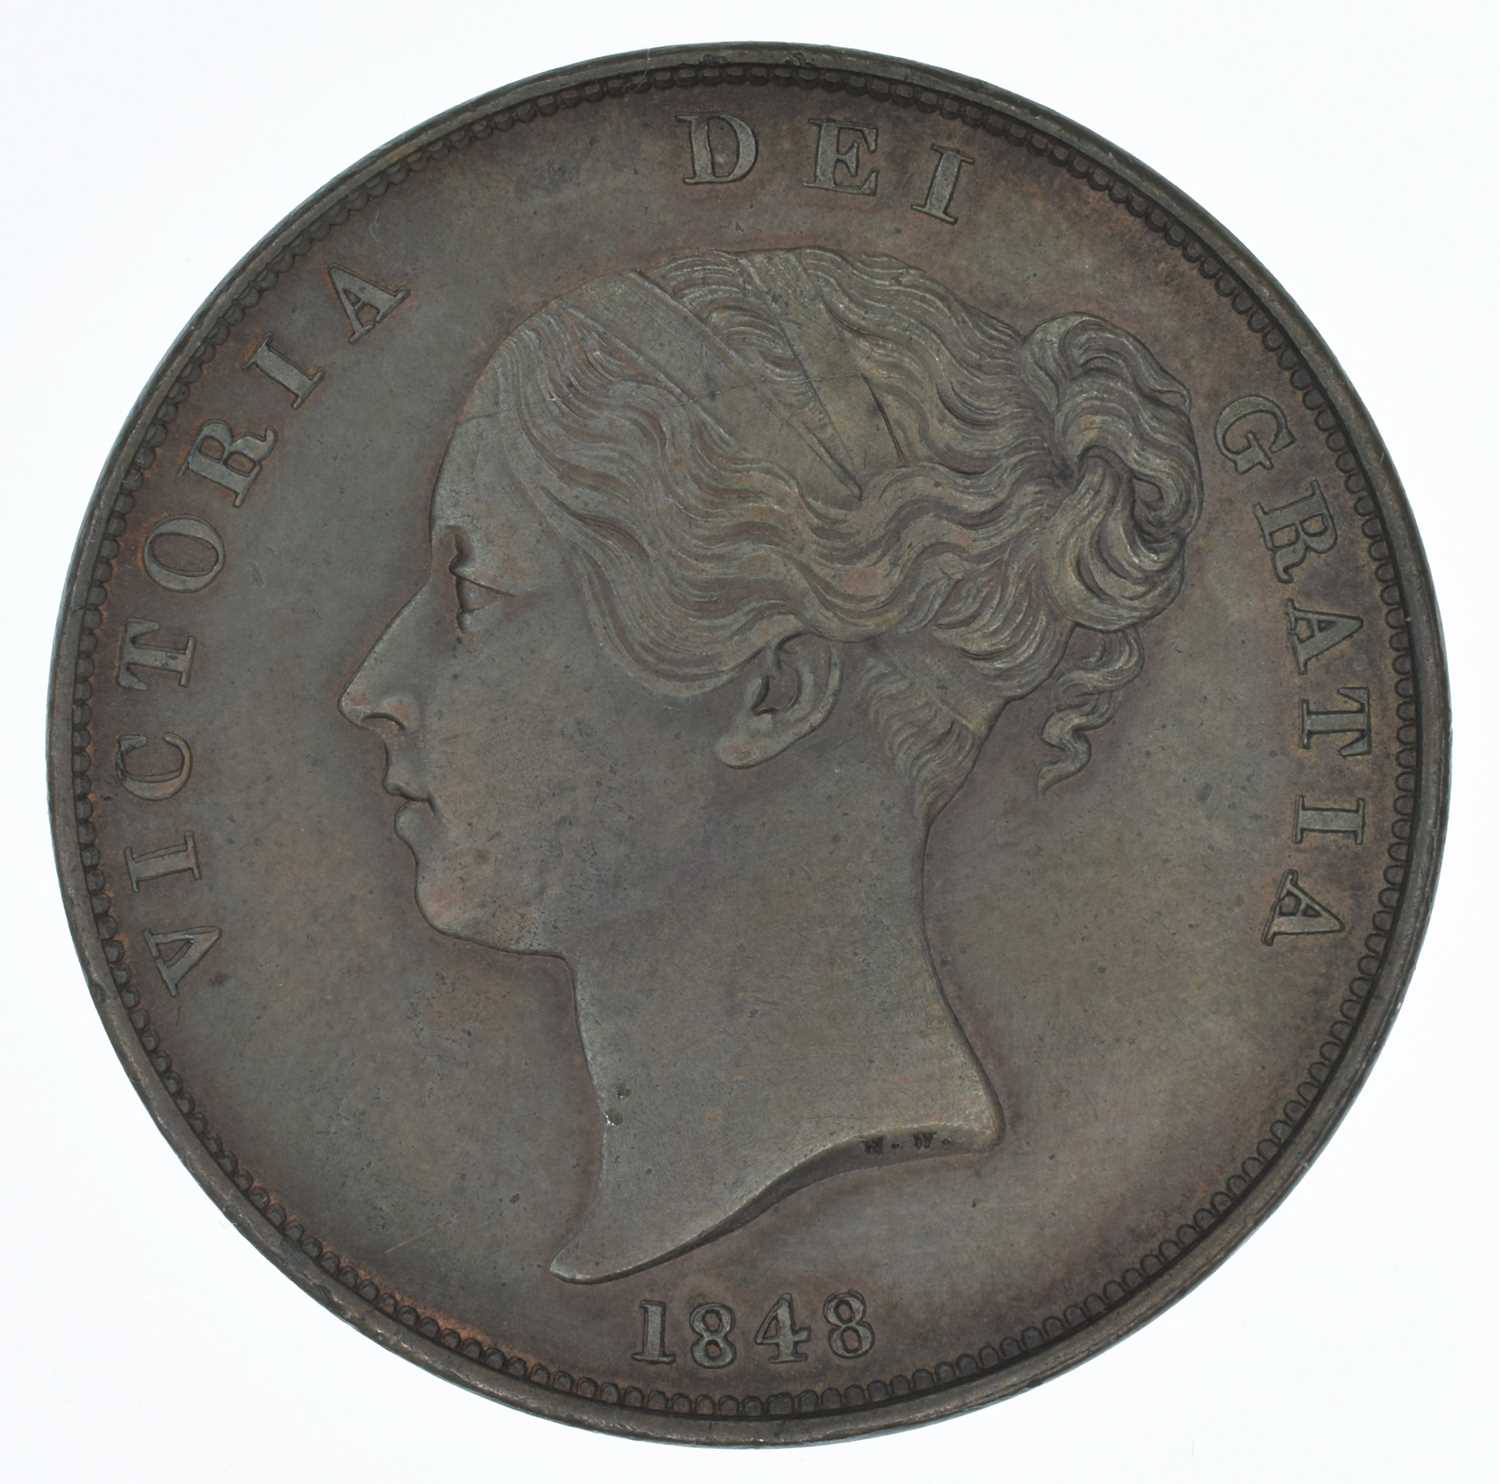 Lot 60 - Queen Victoria, Penny, 1848, gEF.